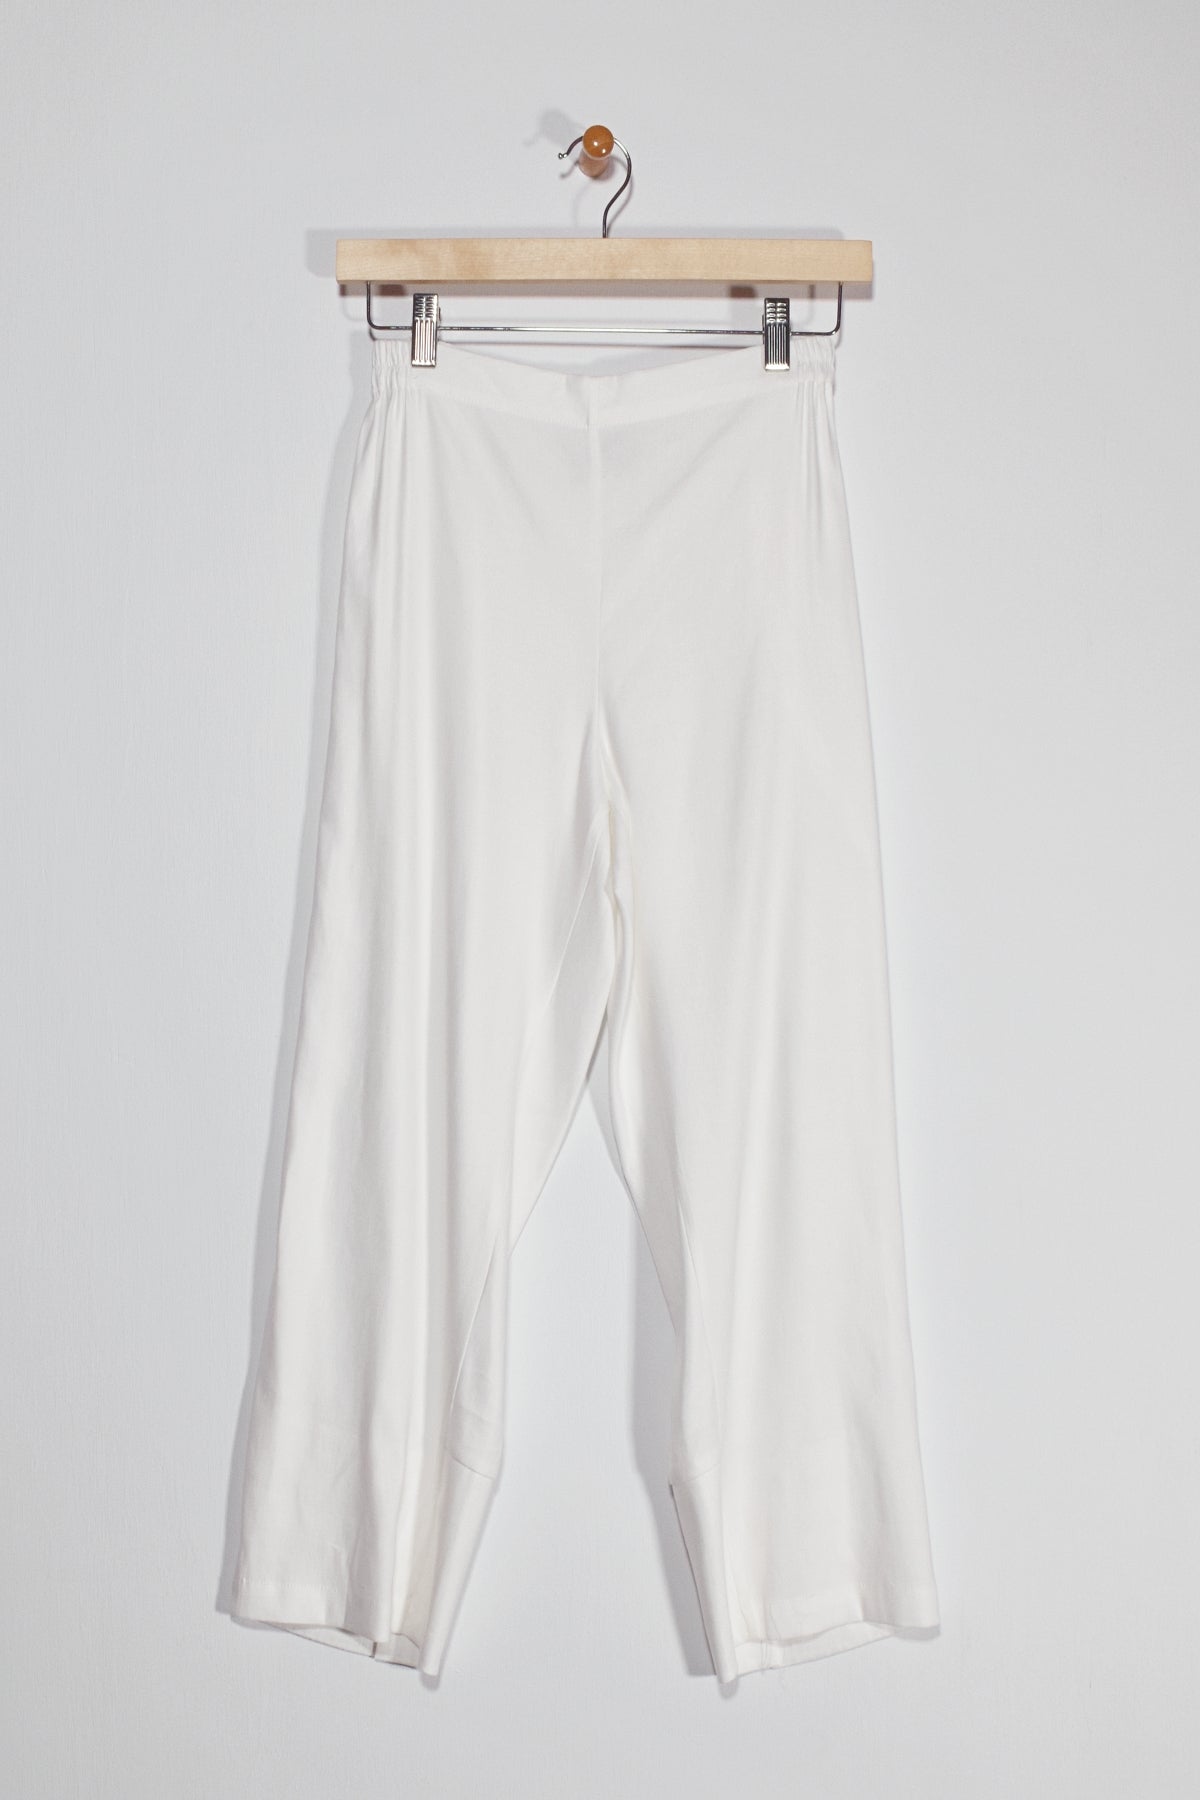 35” Capri Pants with Flat Front Elastic Waist - Ballin's LTD